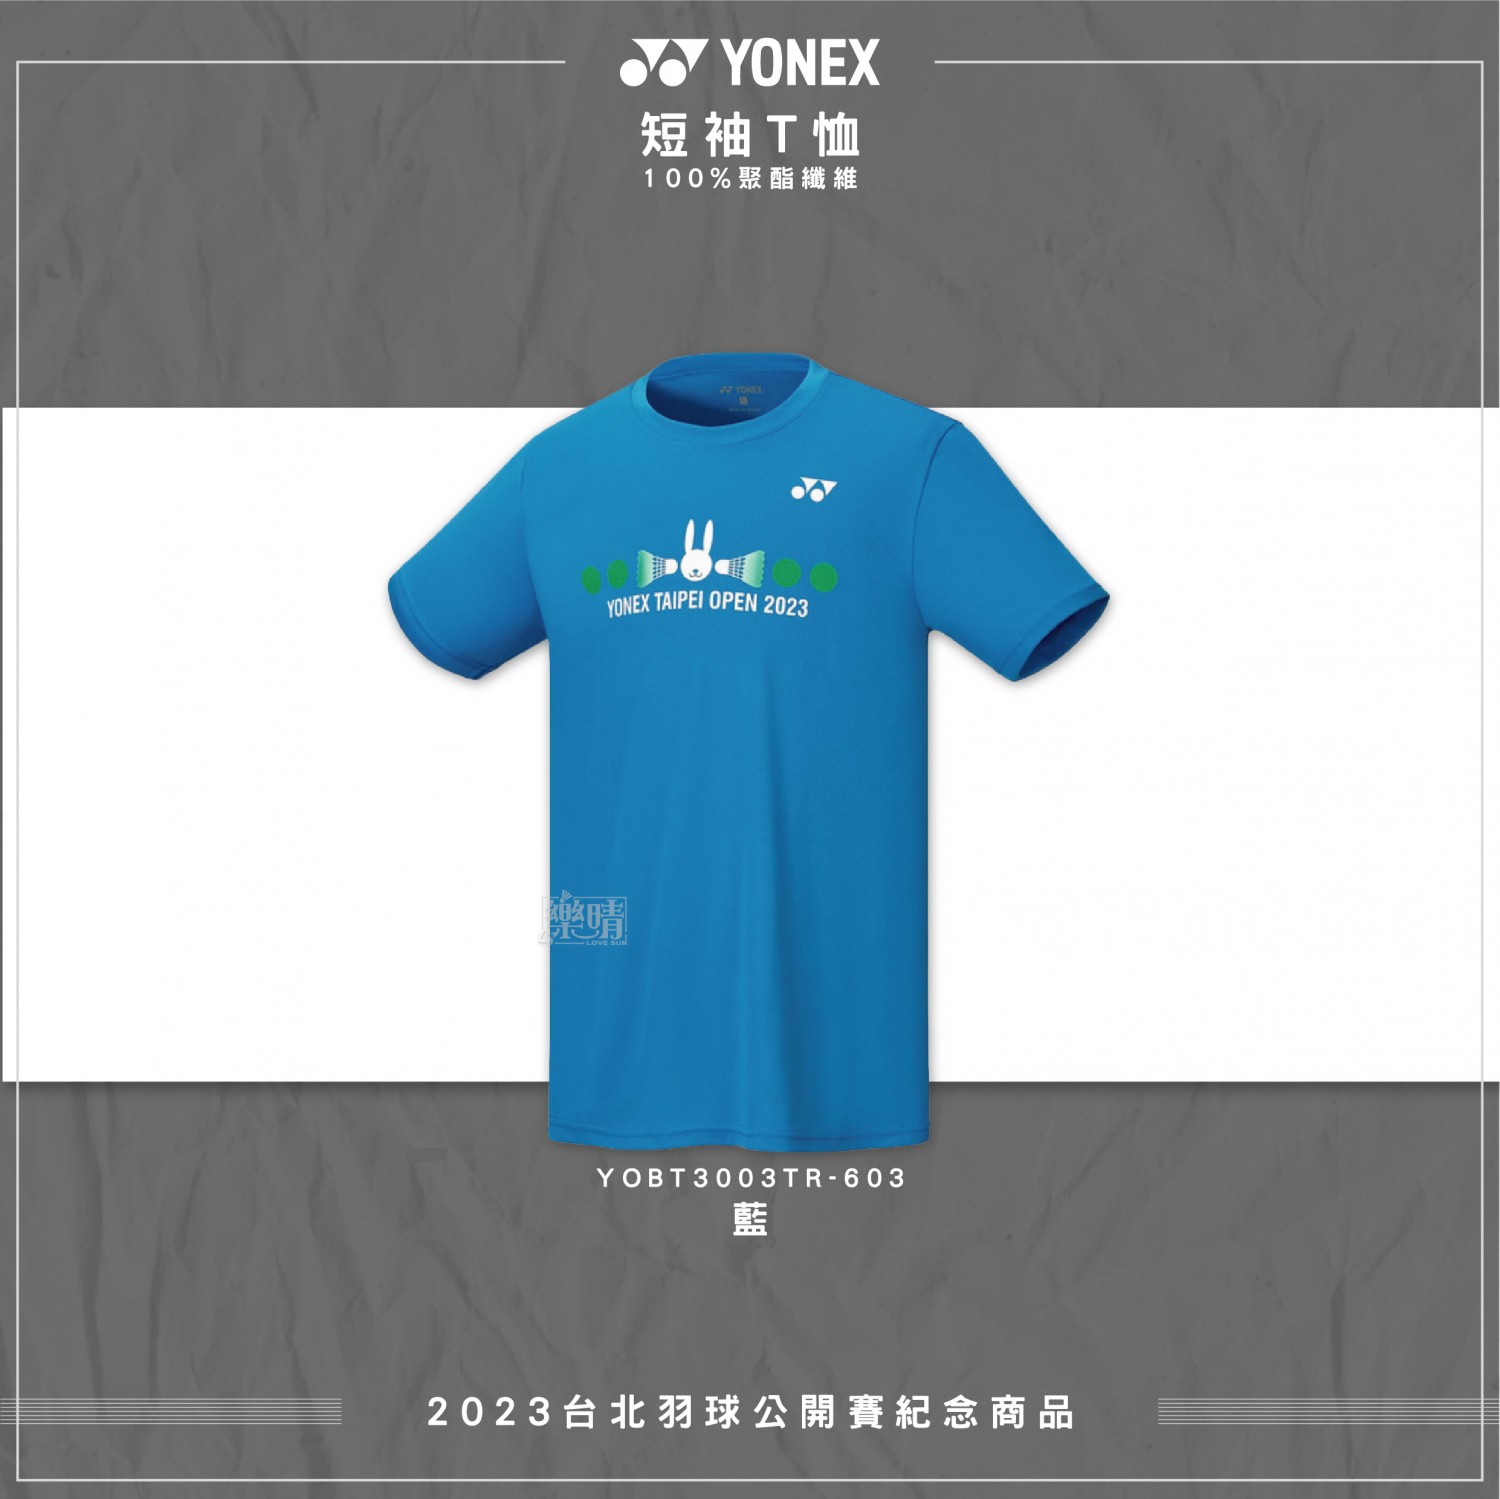 YONEX 短袖 YOBT3003TR-603